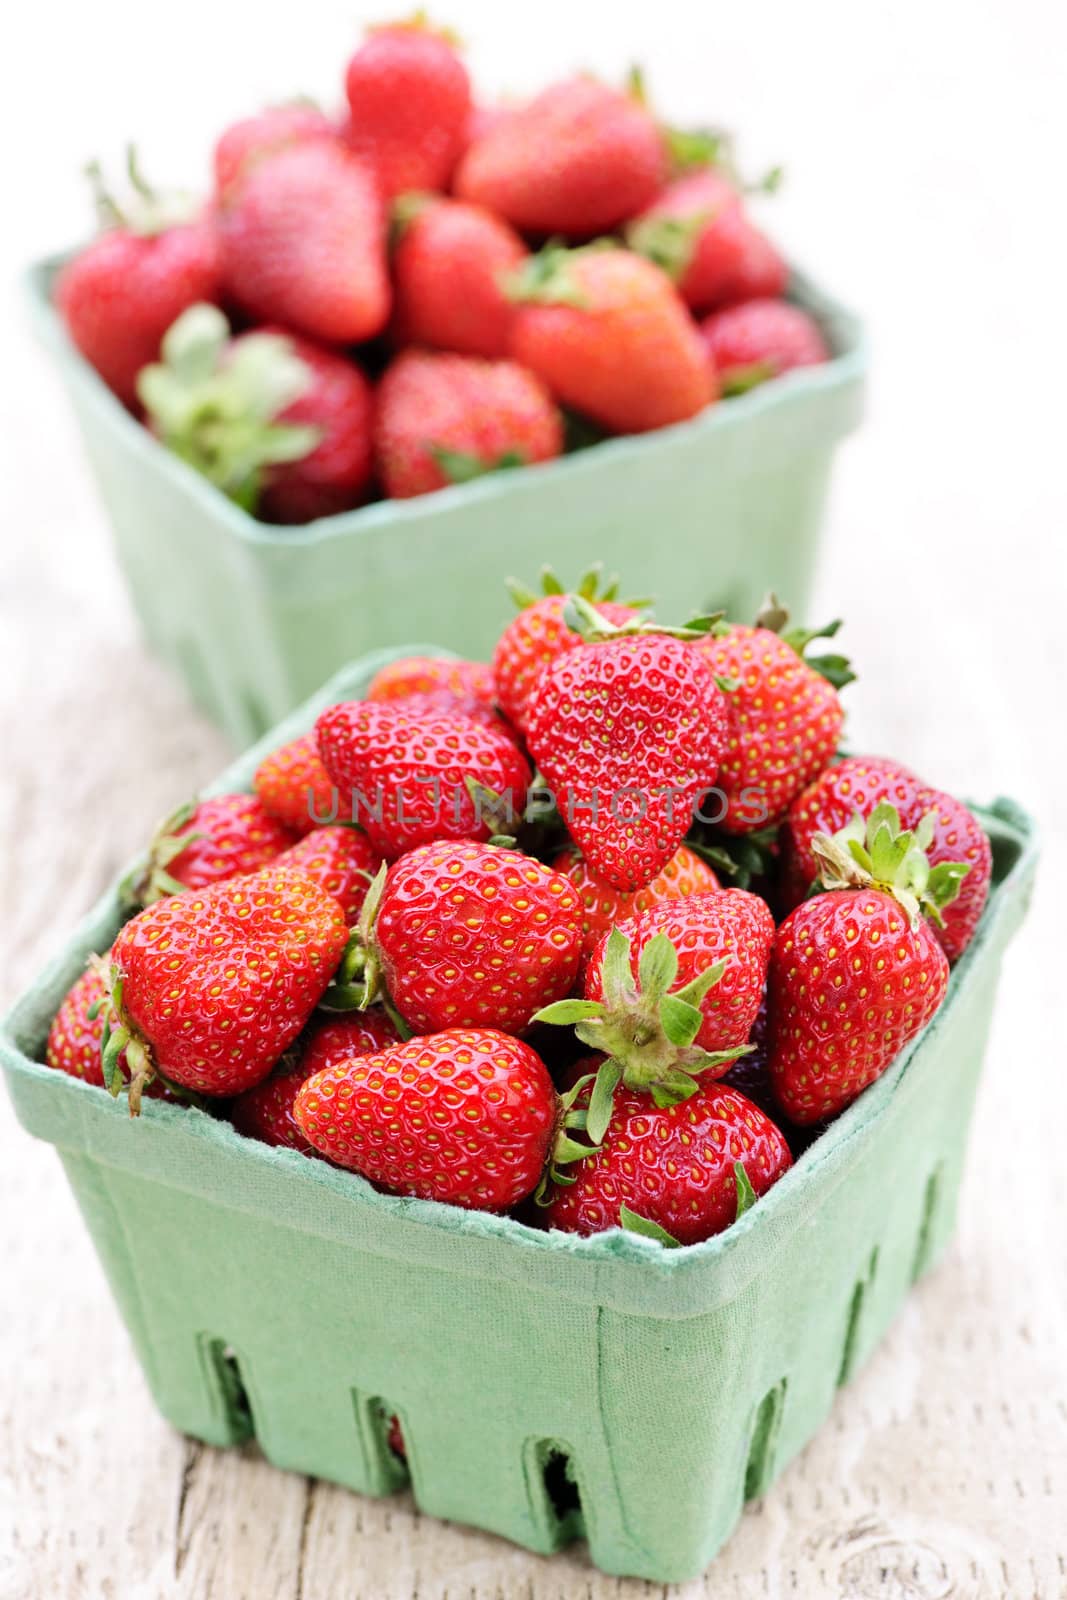 Strawberries by elenathewise